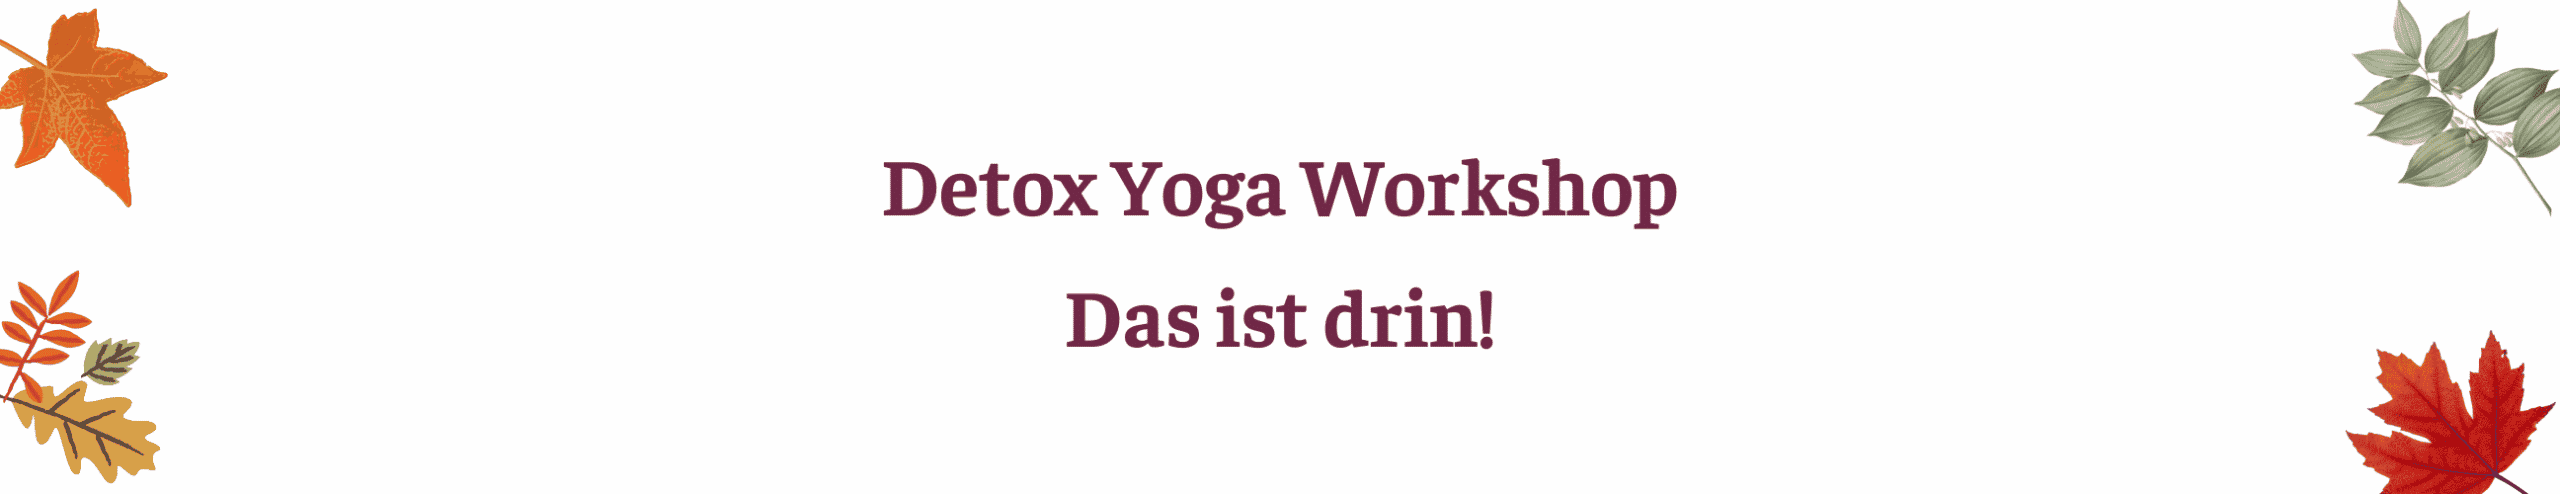 Detox Yoga Workshop: Das ist drin!